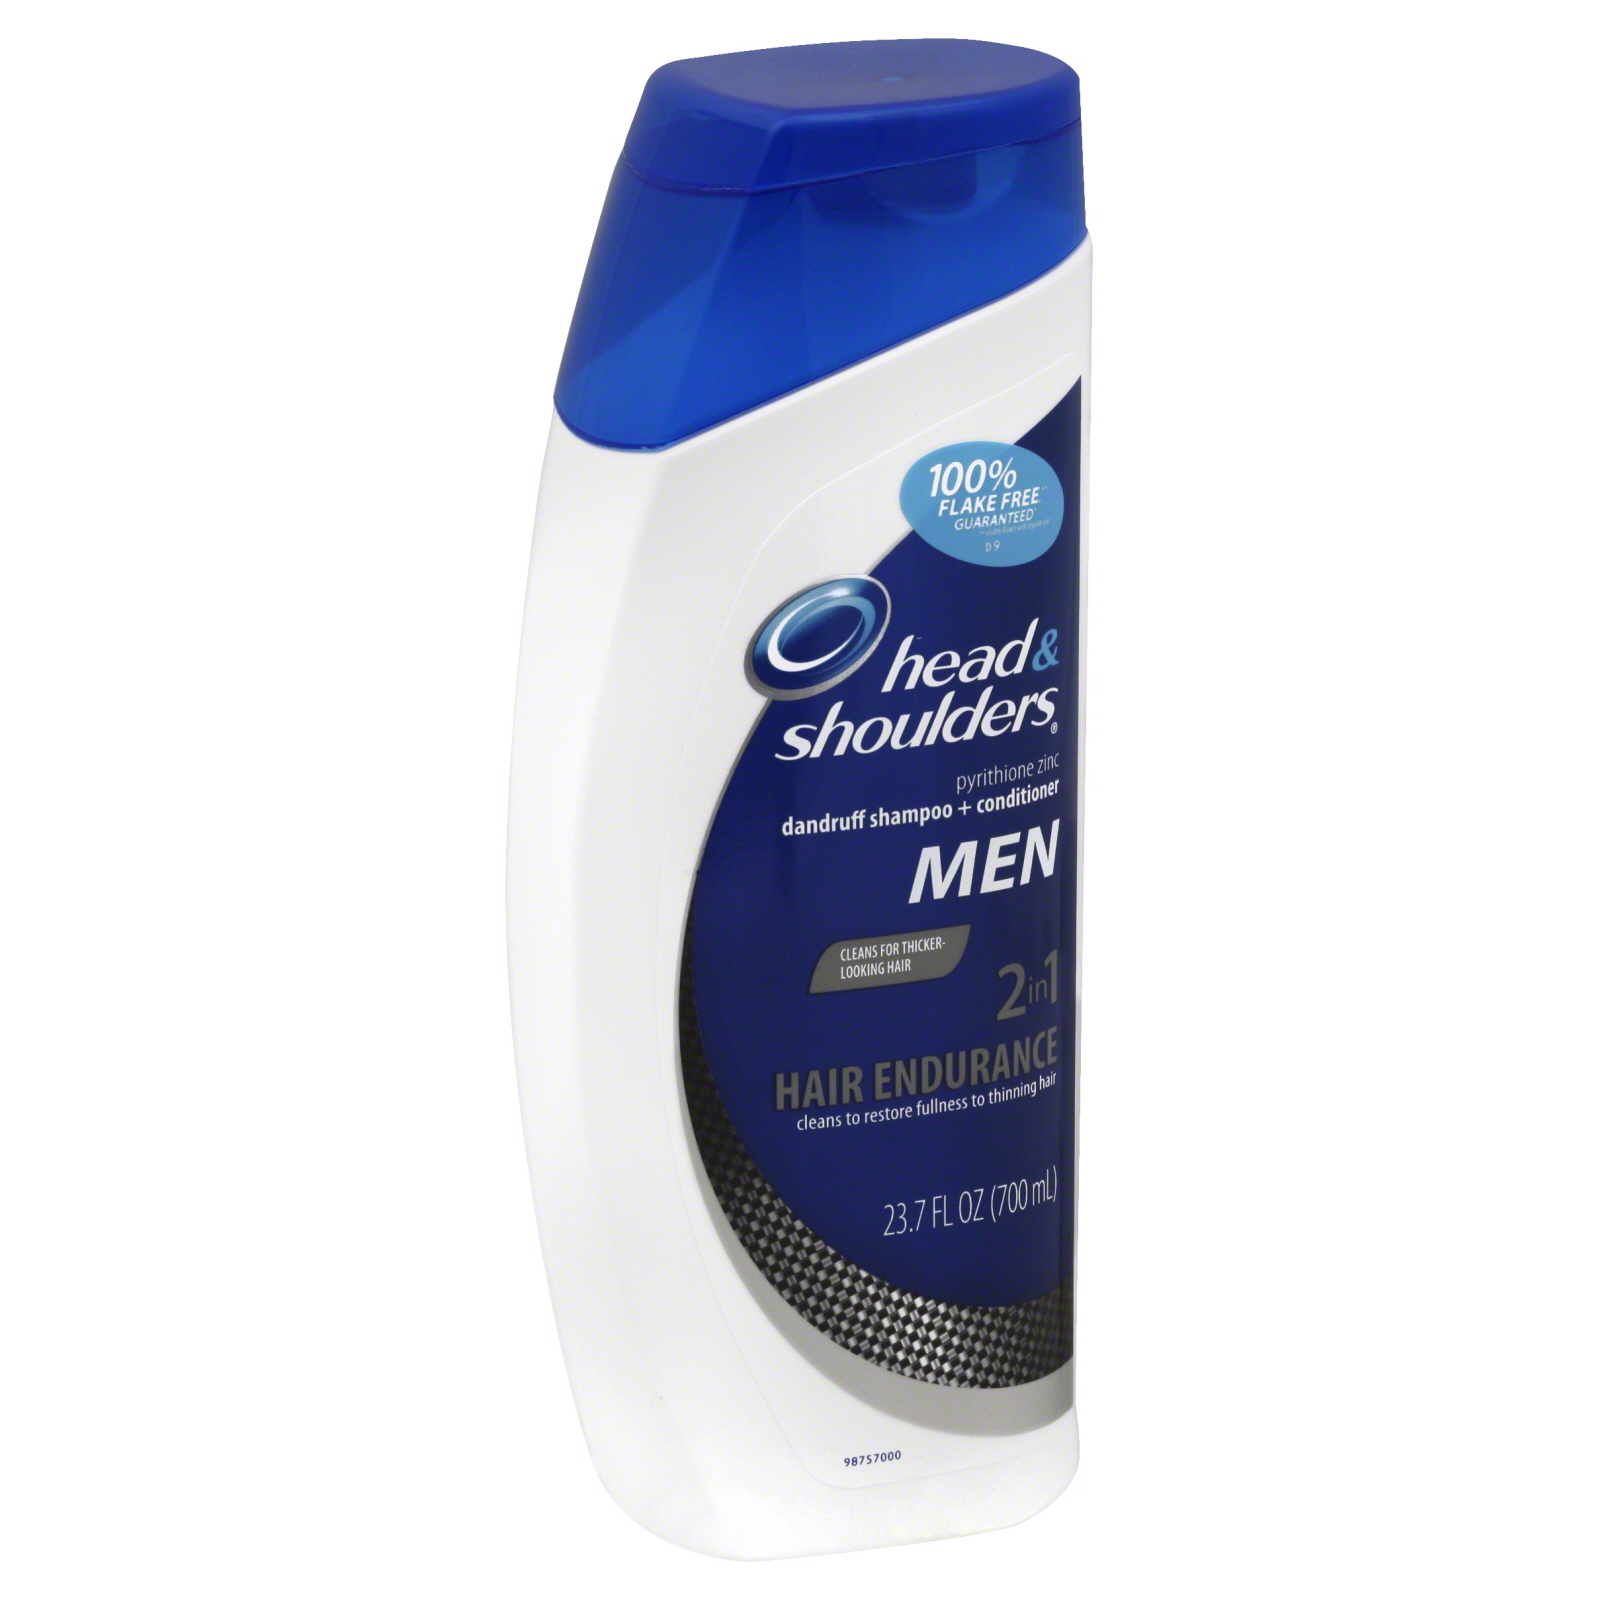 Head & Shoulders Dandruff Shampoo + Conditioner, 2 in 1, 23.7 fl oz (700 ml)